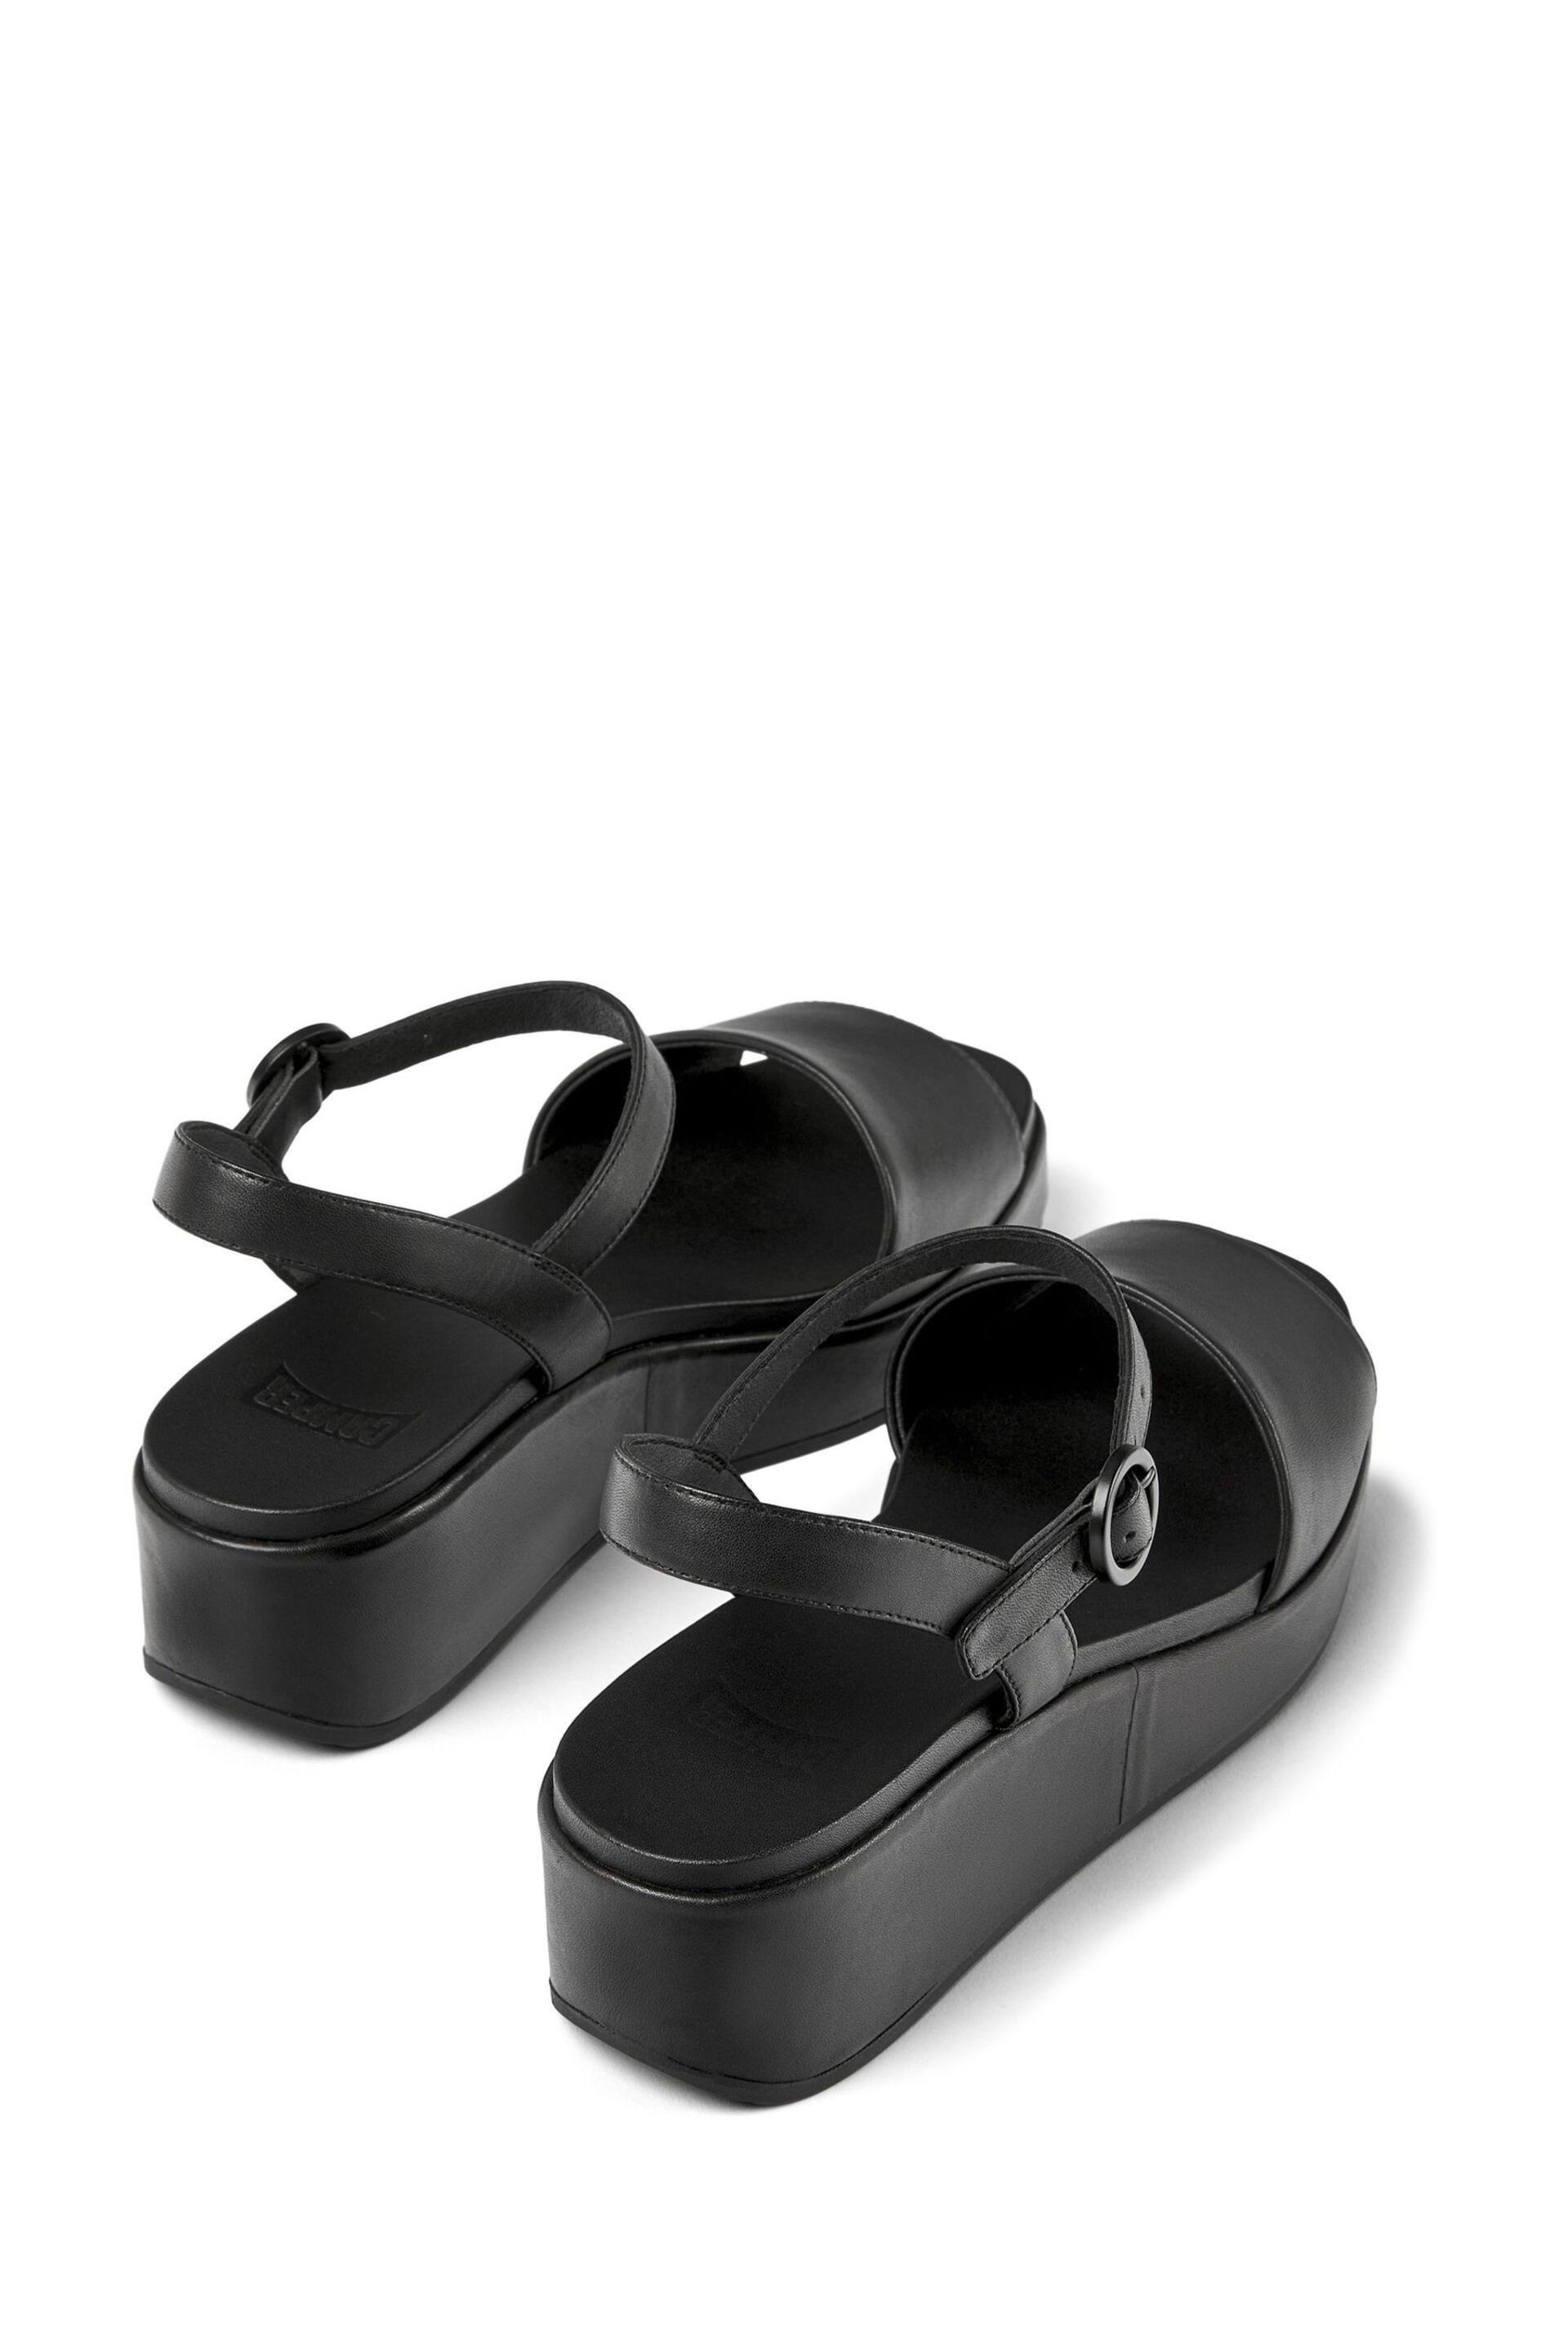 Camper Black Supersoft Negro/Misia Flin Negro Shoes - Image 3 of 5